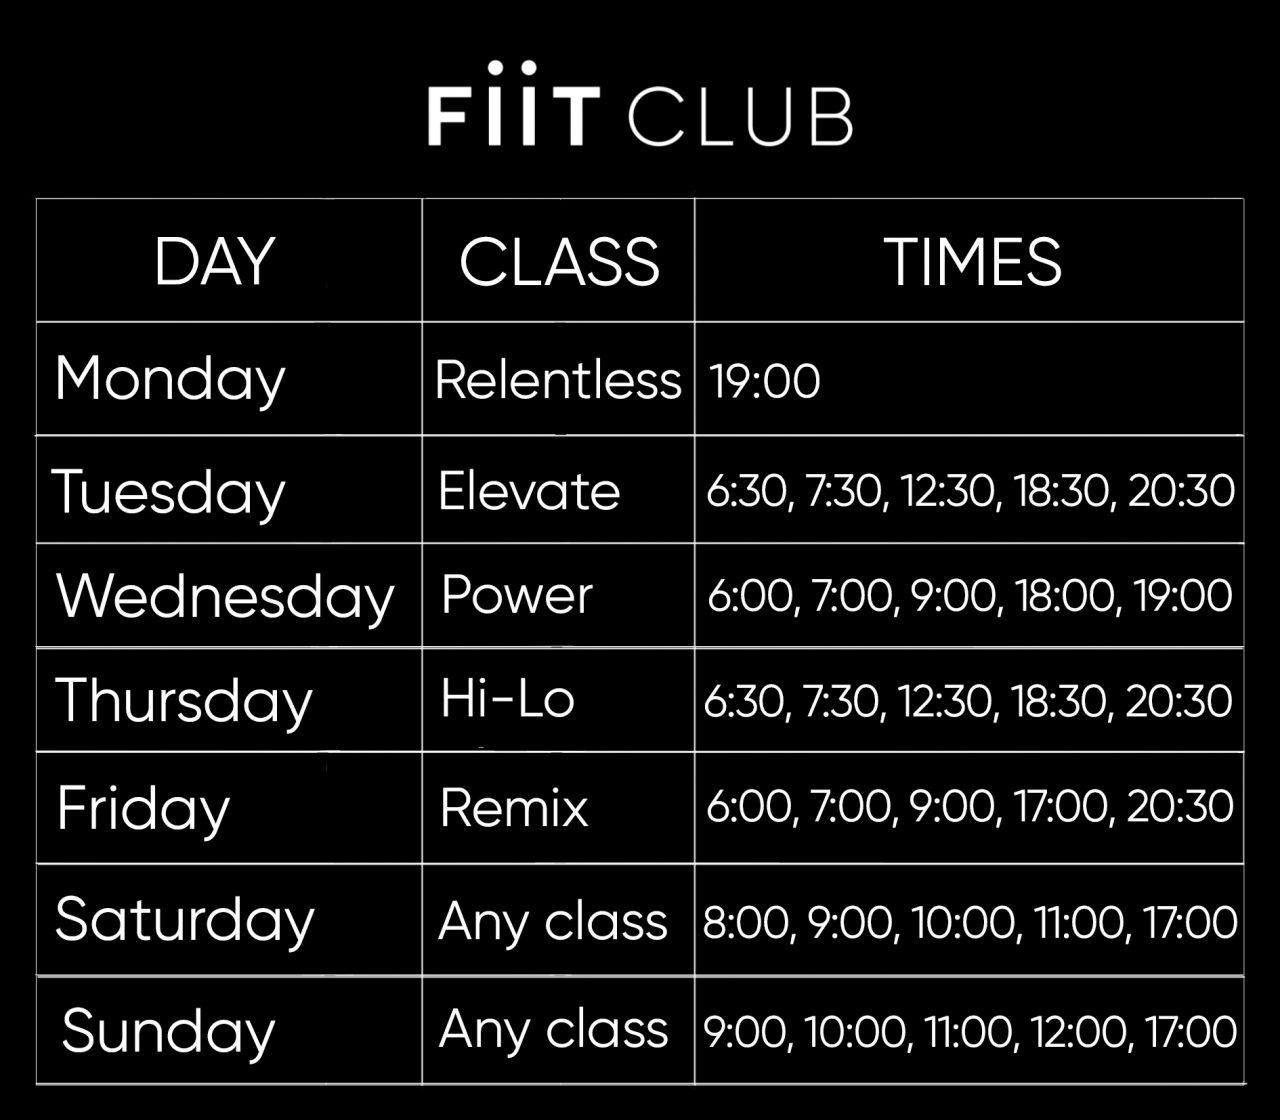 Weekly Fiit Club class schedule